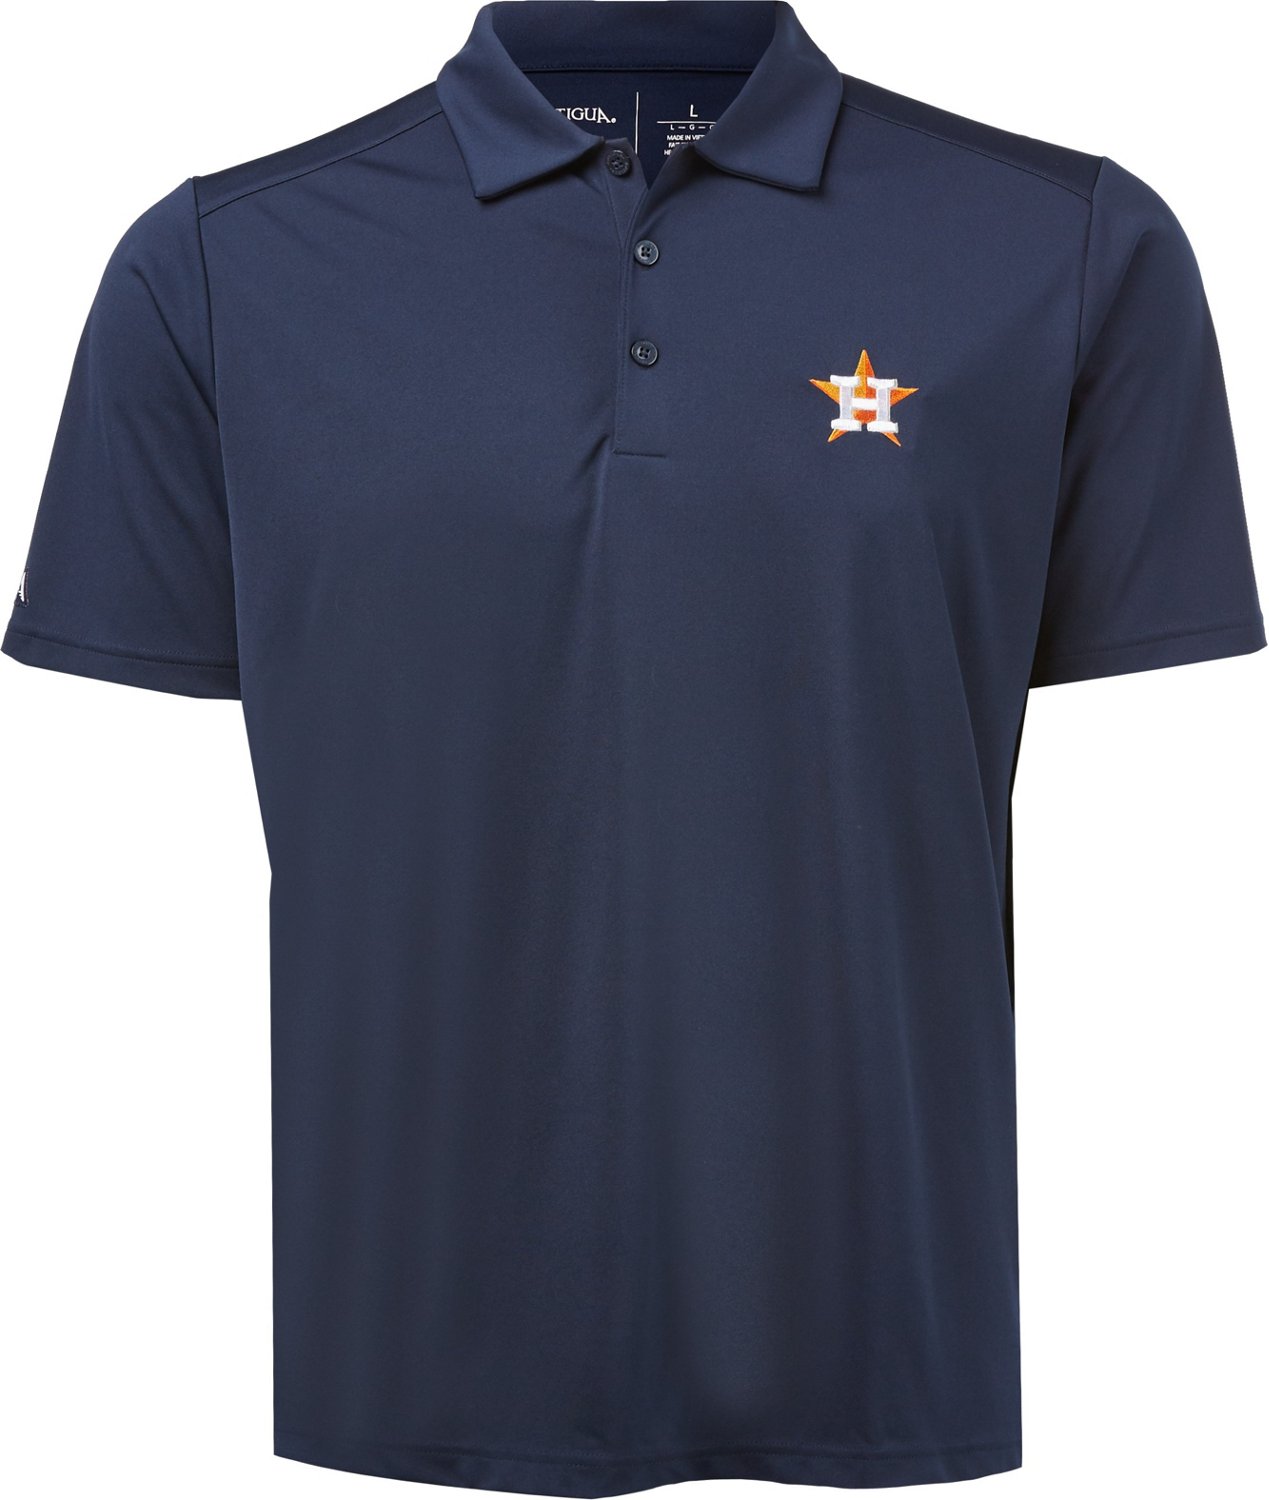 Antigua Men's Houston Astros Par 3 Polo Shirt